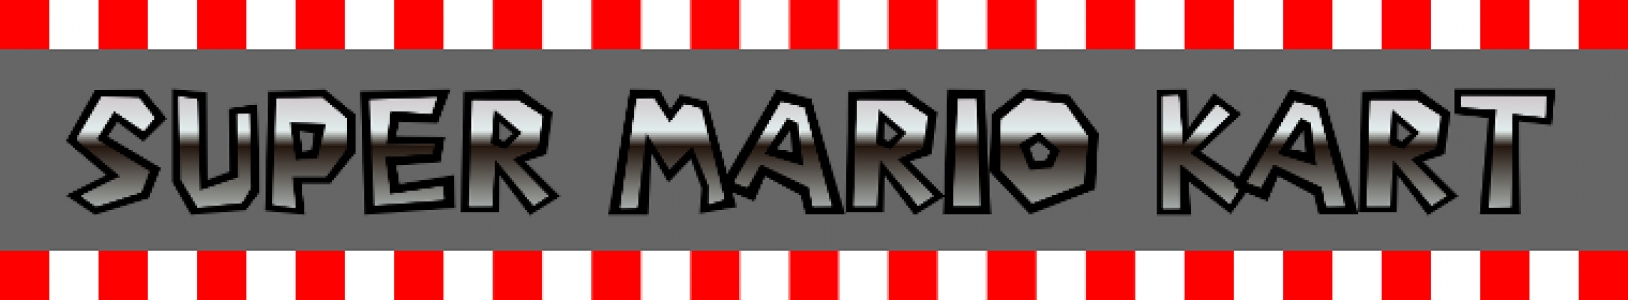 Super Mario Kart banner